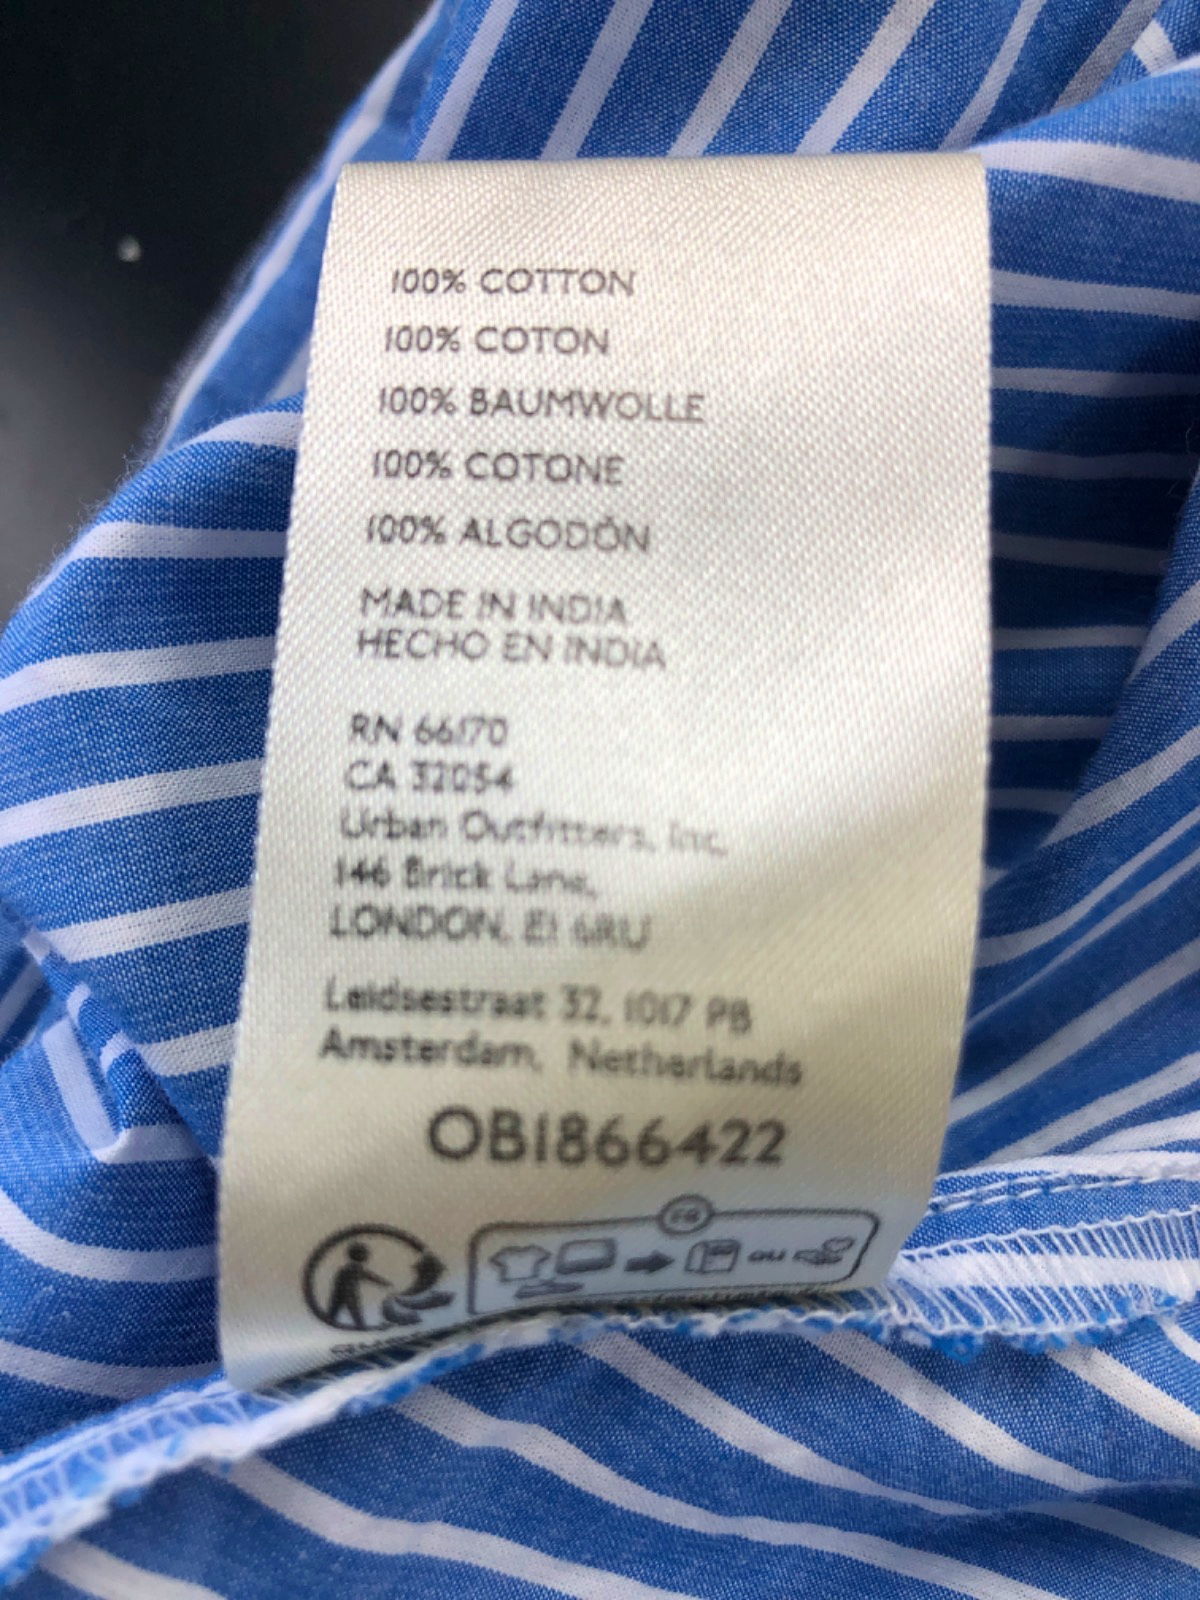 ANTHROPOLOGIE Pilcro Blue Stripe Patchwork Shirt UK L